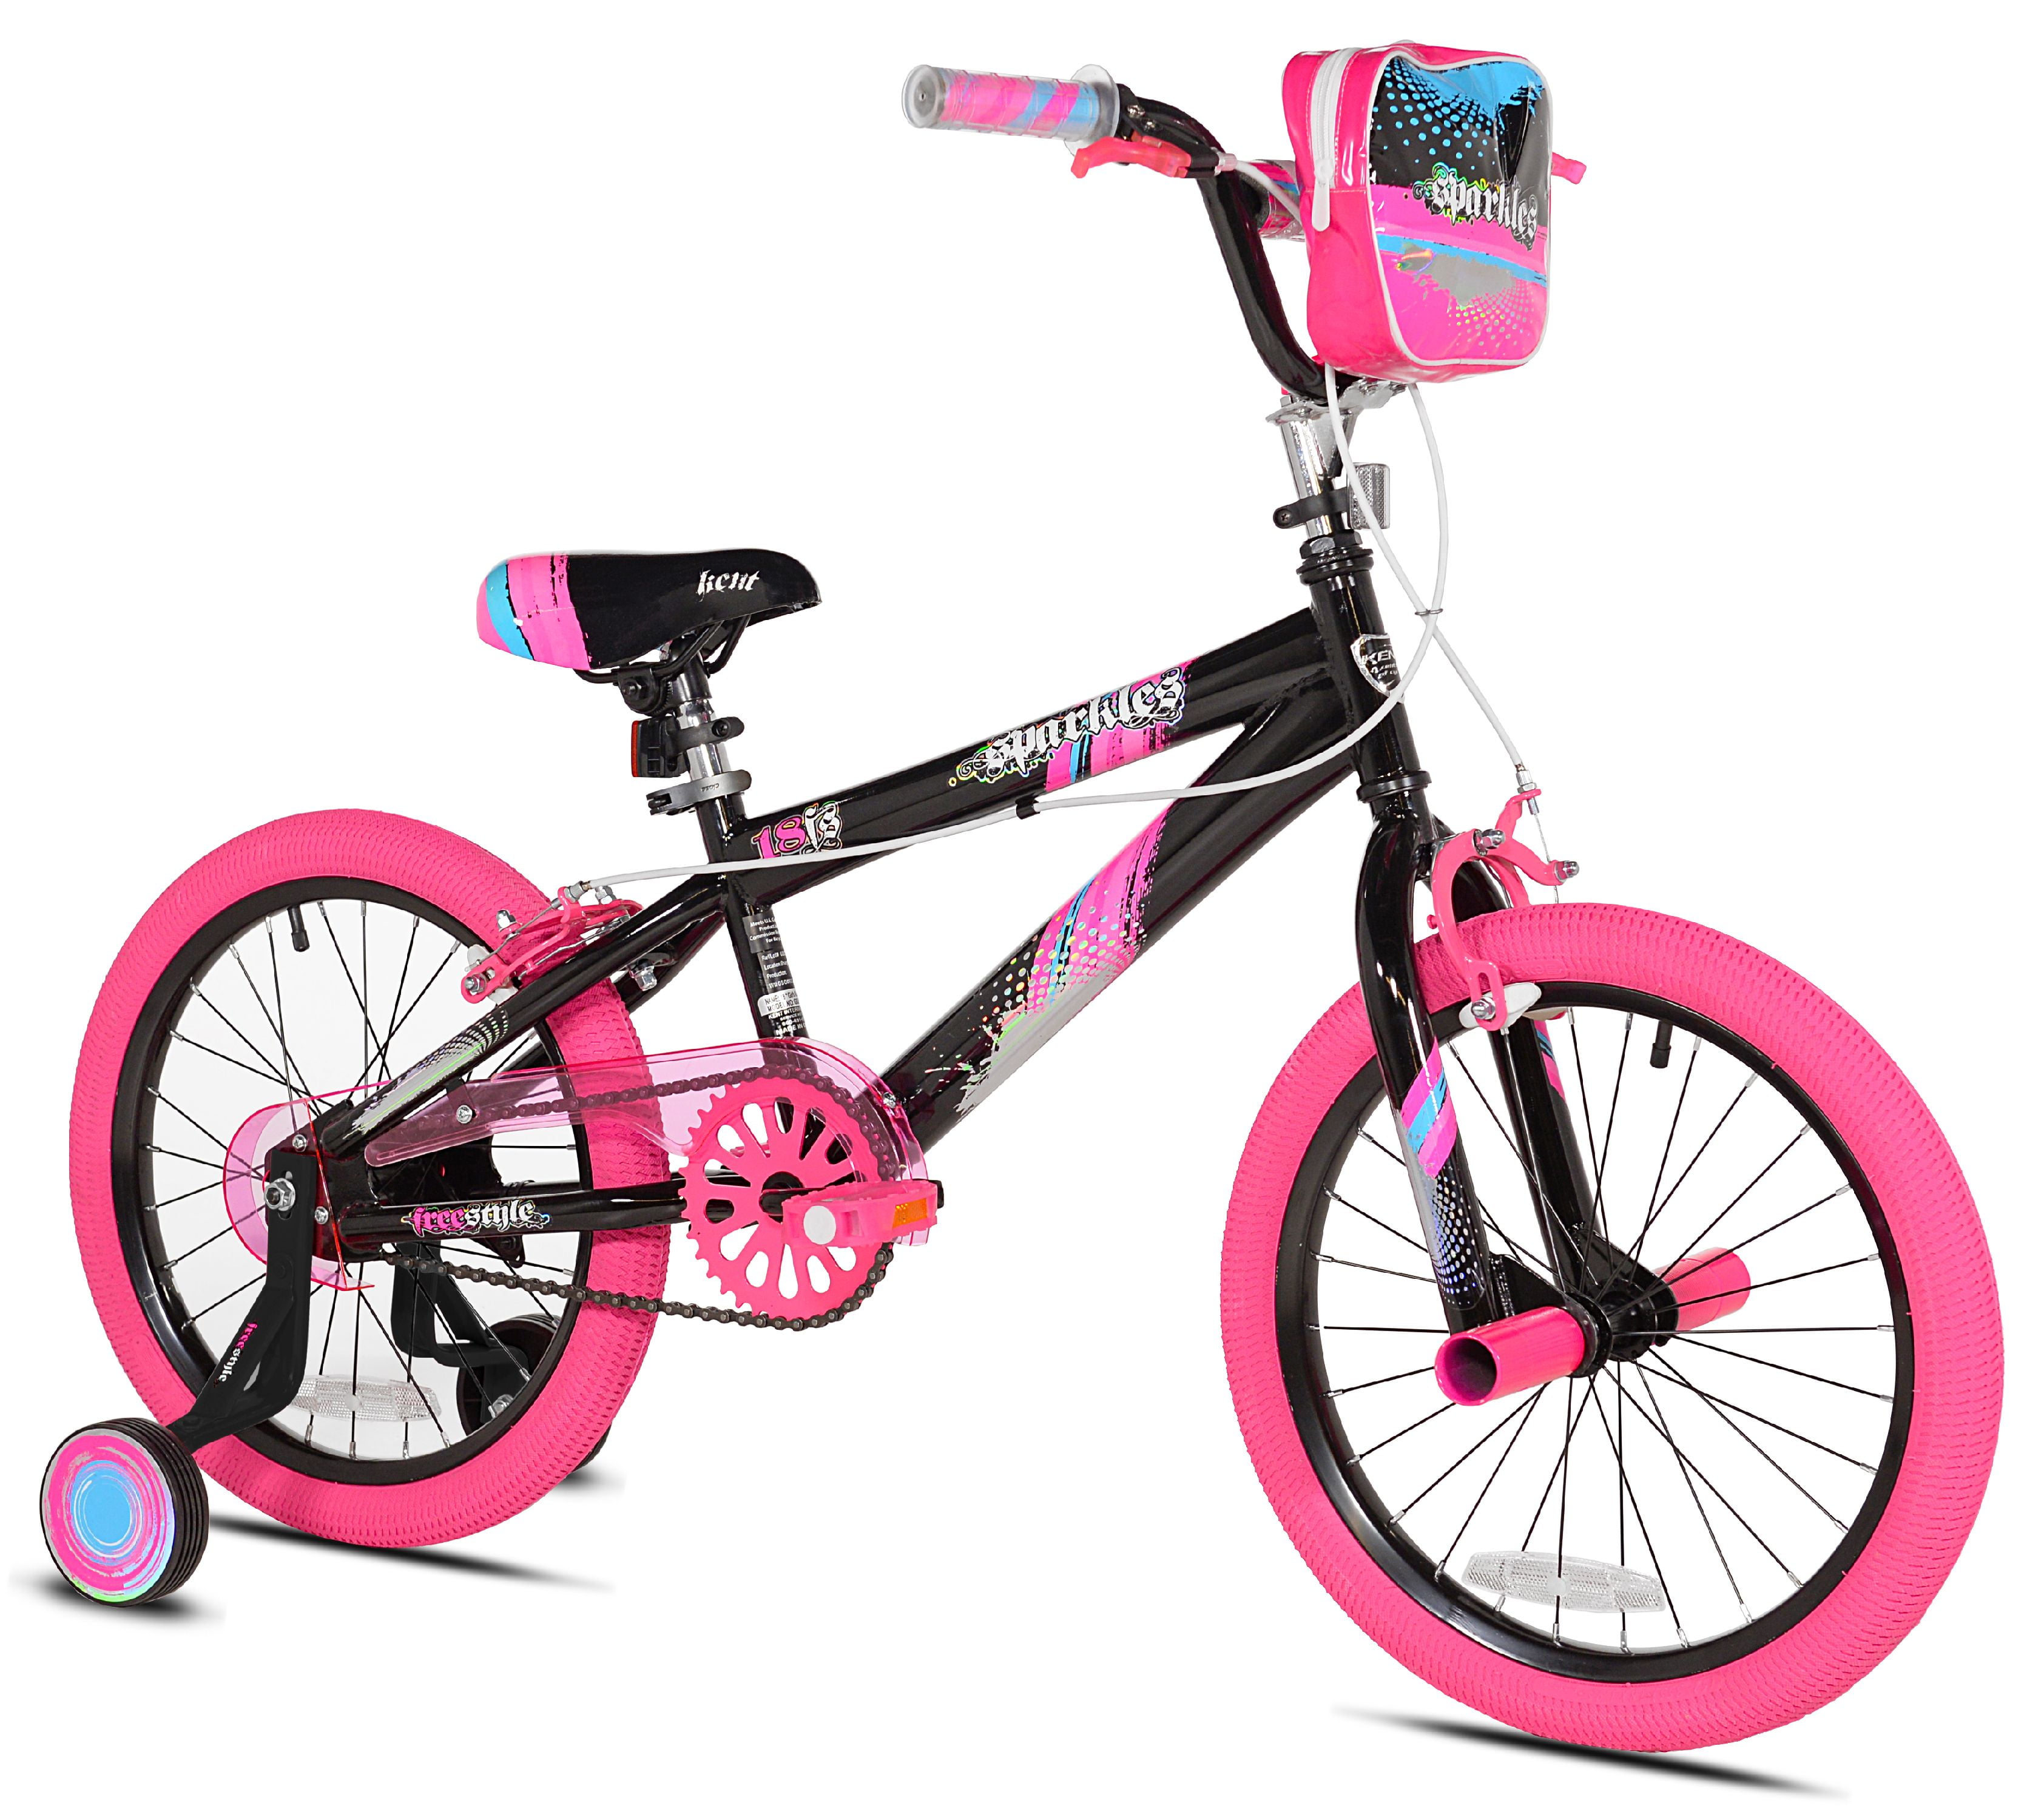 Huffy 20 Inch Girls Bike Kids Bicycle Blue Pink Durable Steel Play Ride 